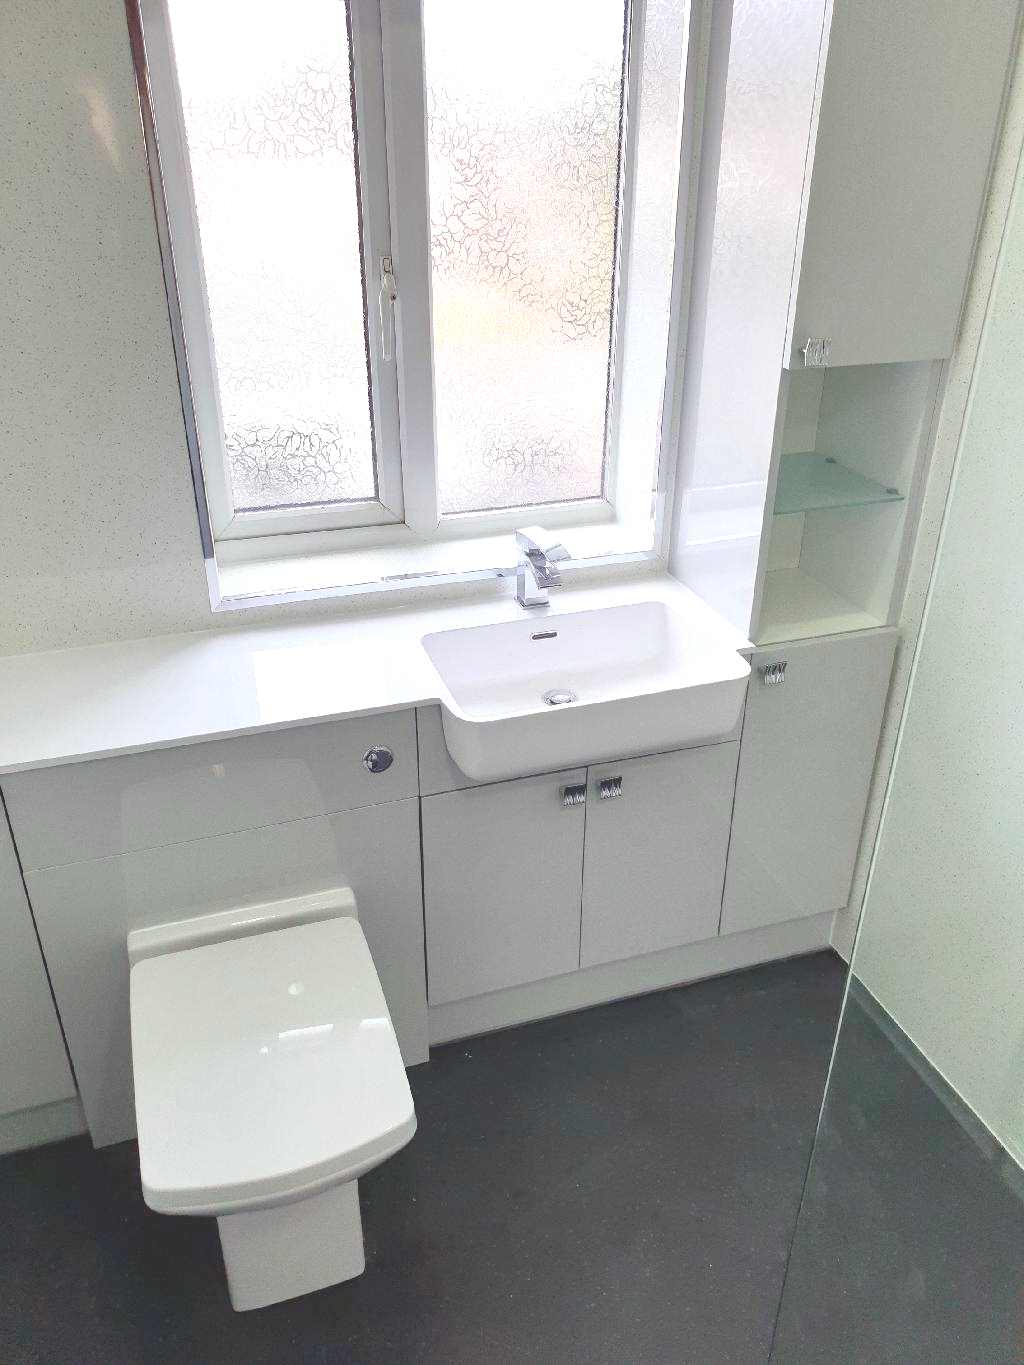 portfolio Example - Luxury Bathrooms Birmingham Wet Room - Flush Toilet - Sink built in cabinet